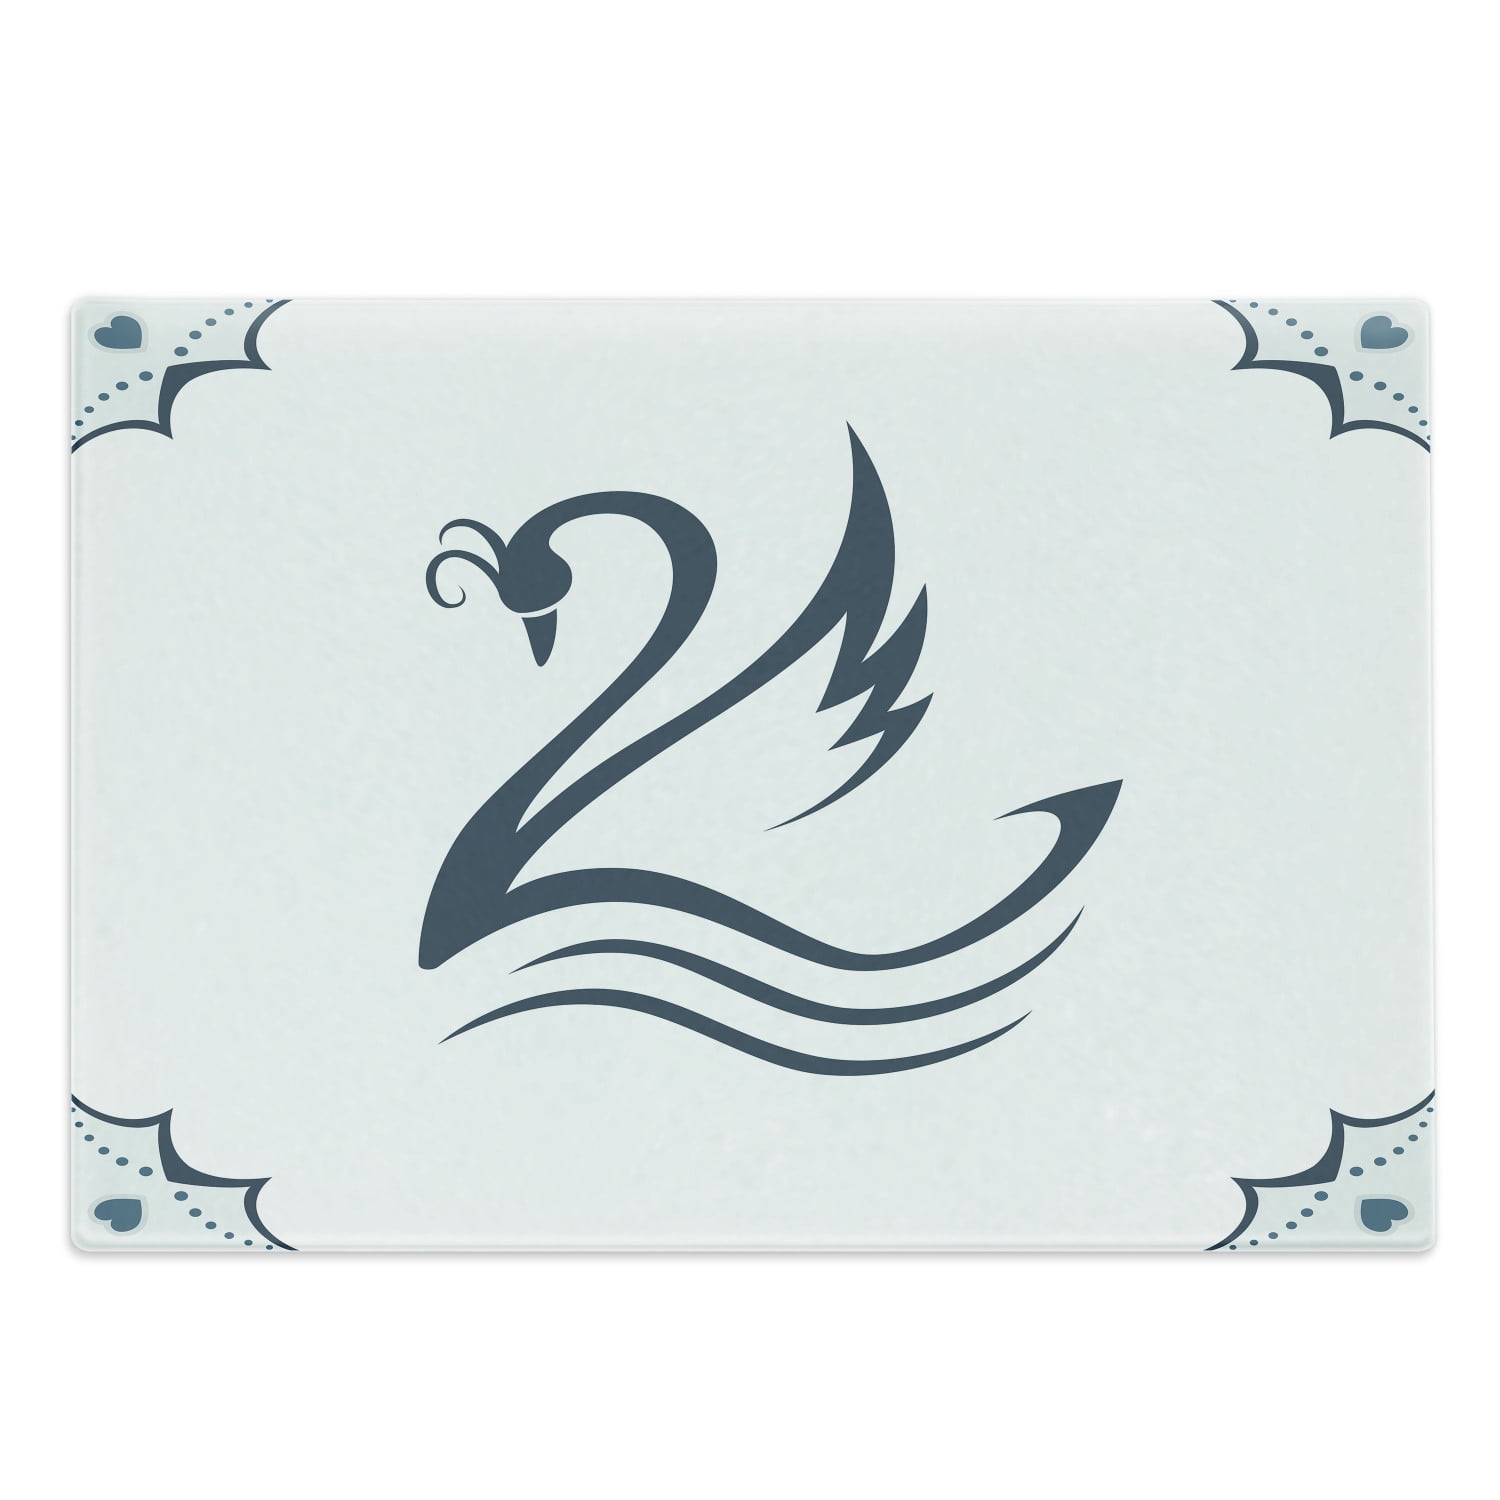 8 Cool Multifunctional Cutting Boards - Design Swan